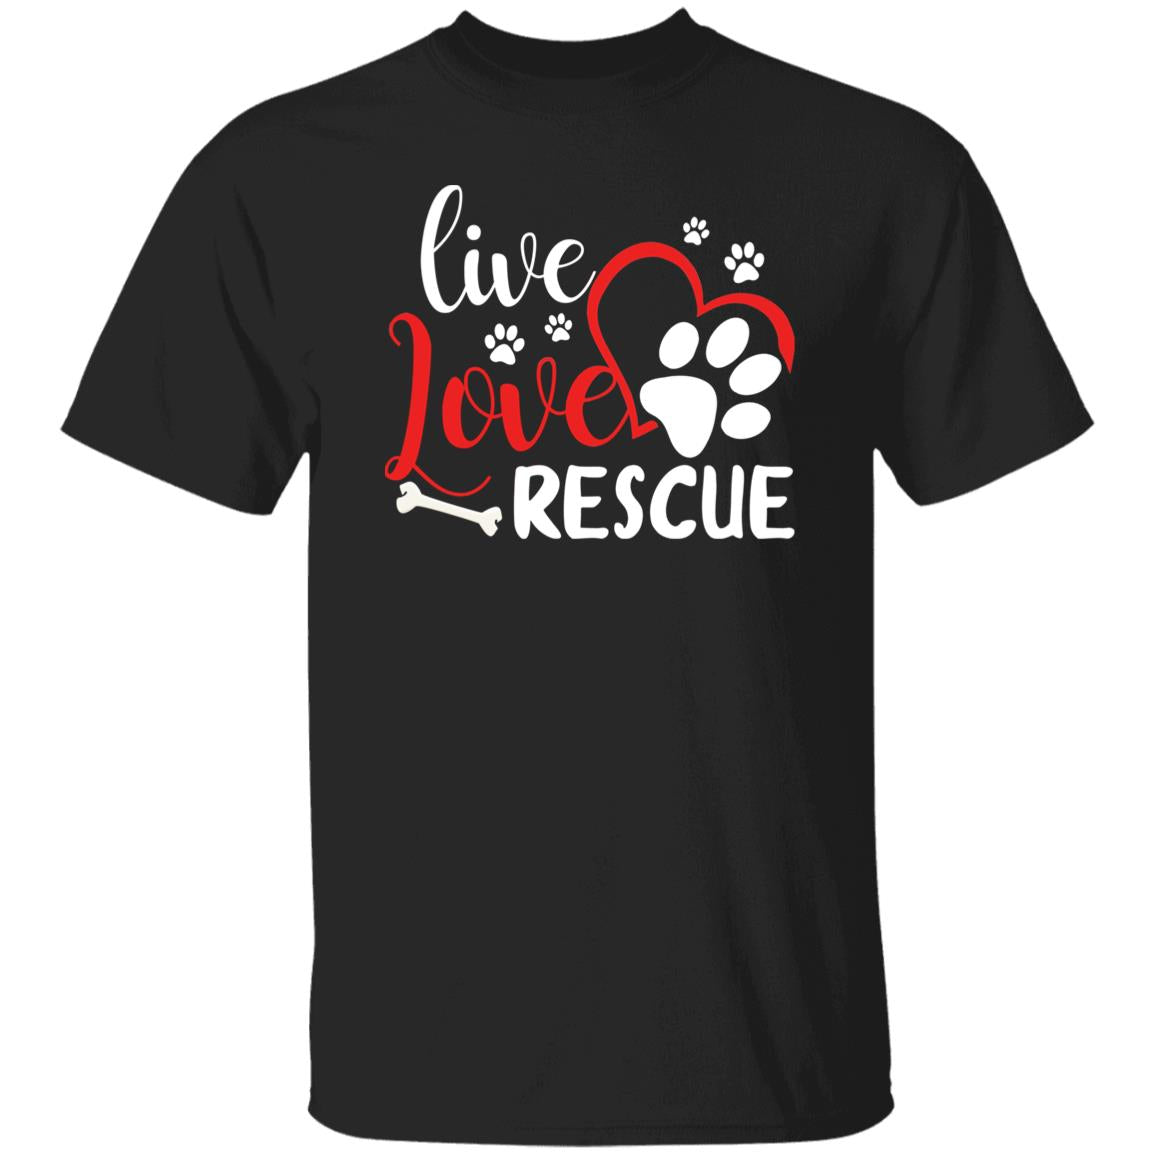 Live love rescue - dog adoption Unisex t-shirt gift black navy dark heather-Family-Gift-Planet